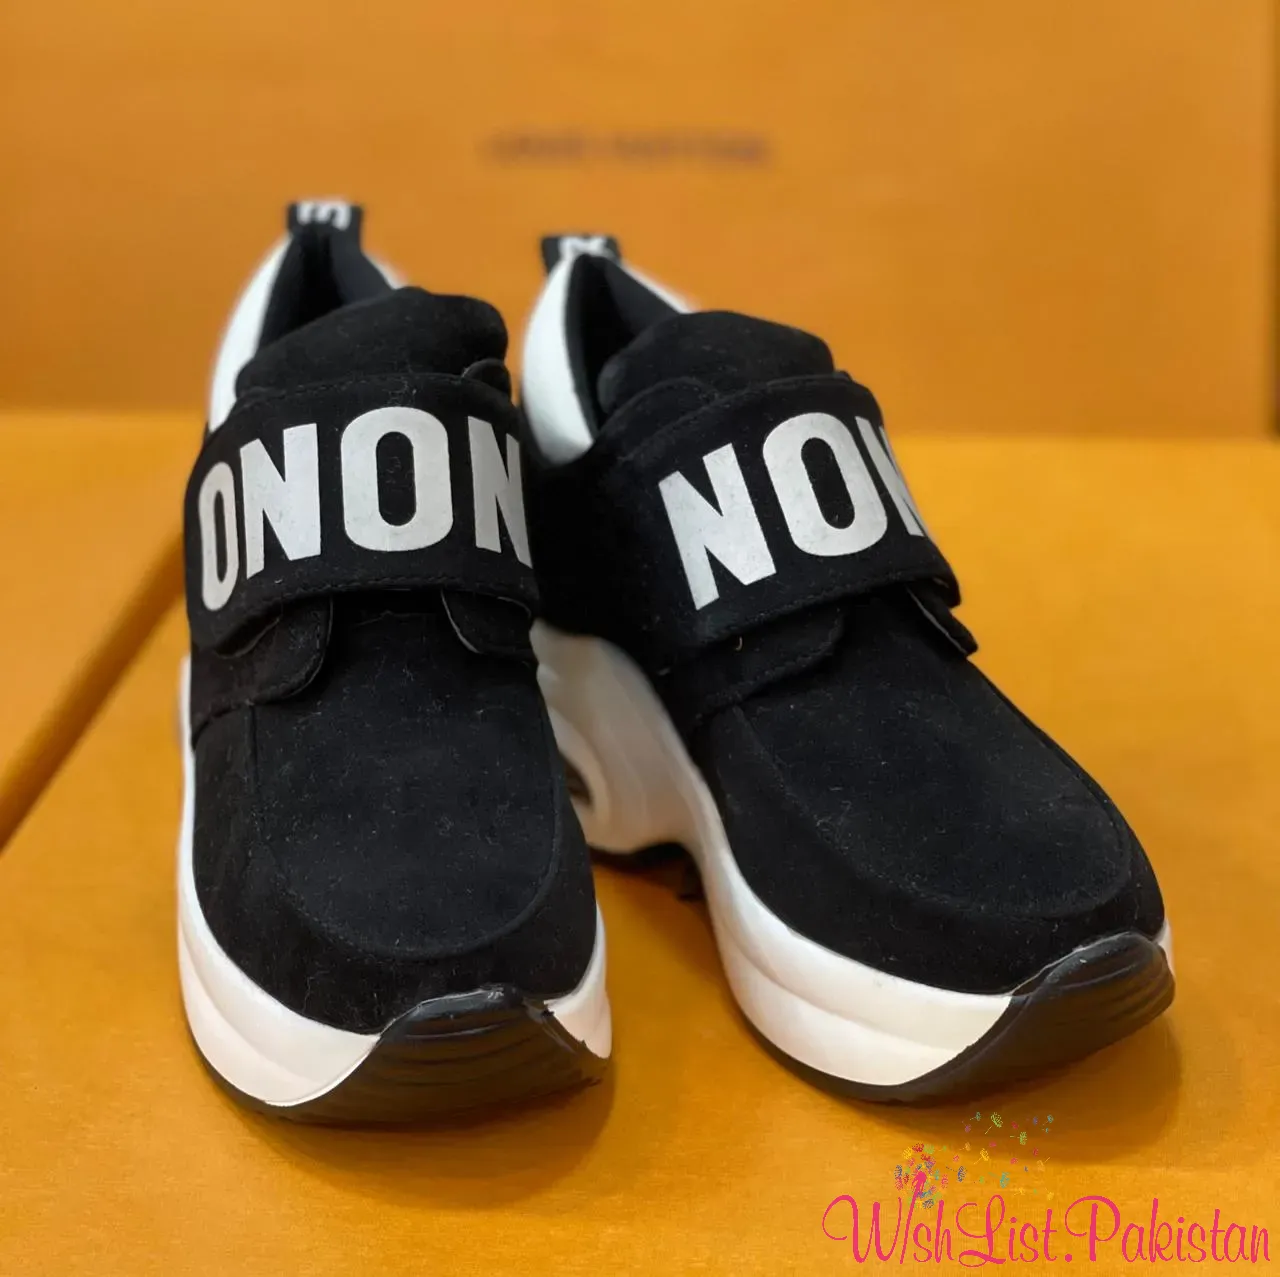 Onon Black Highshoes